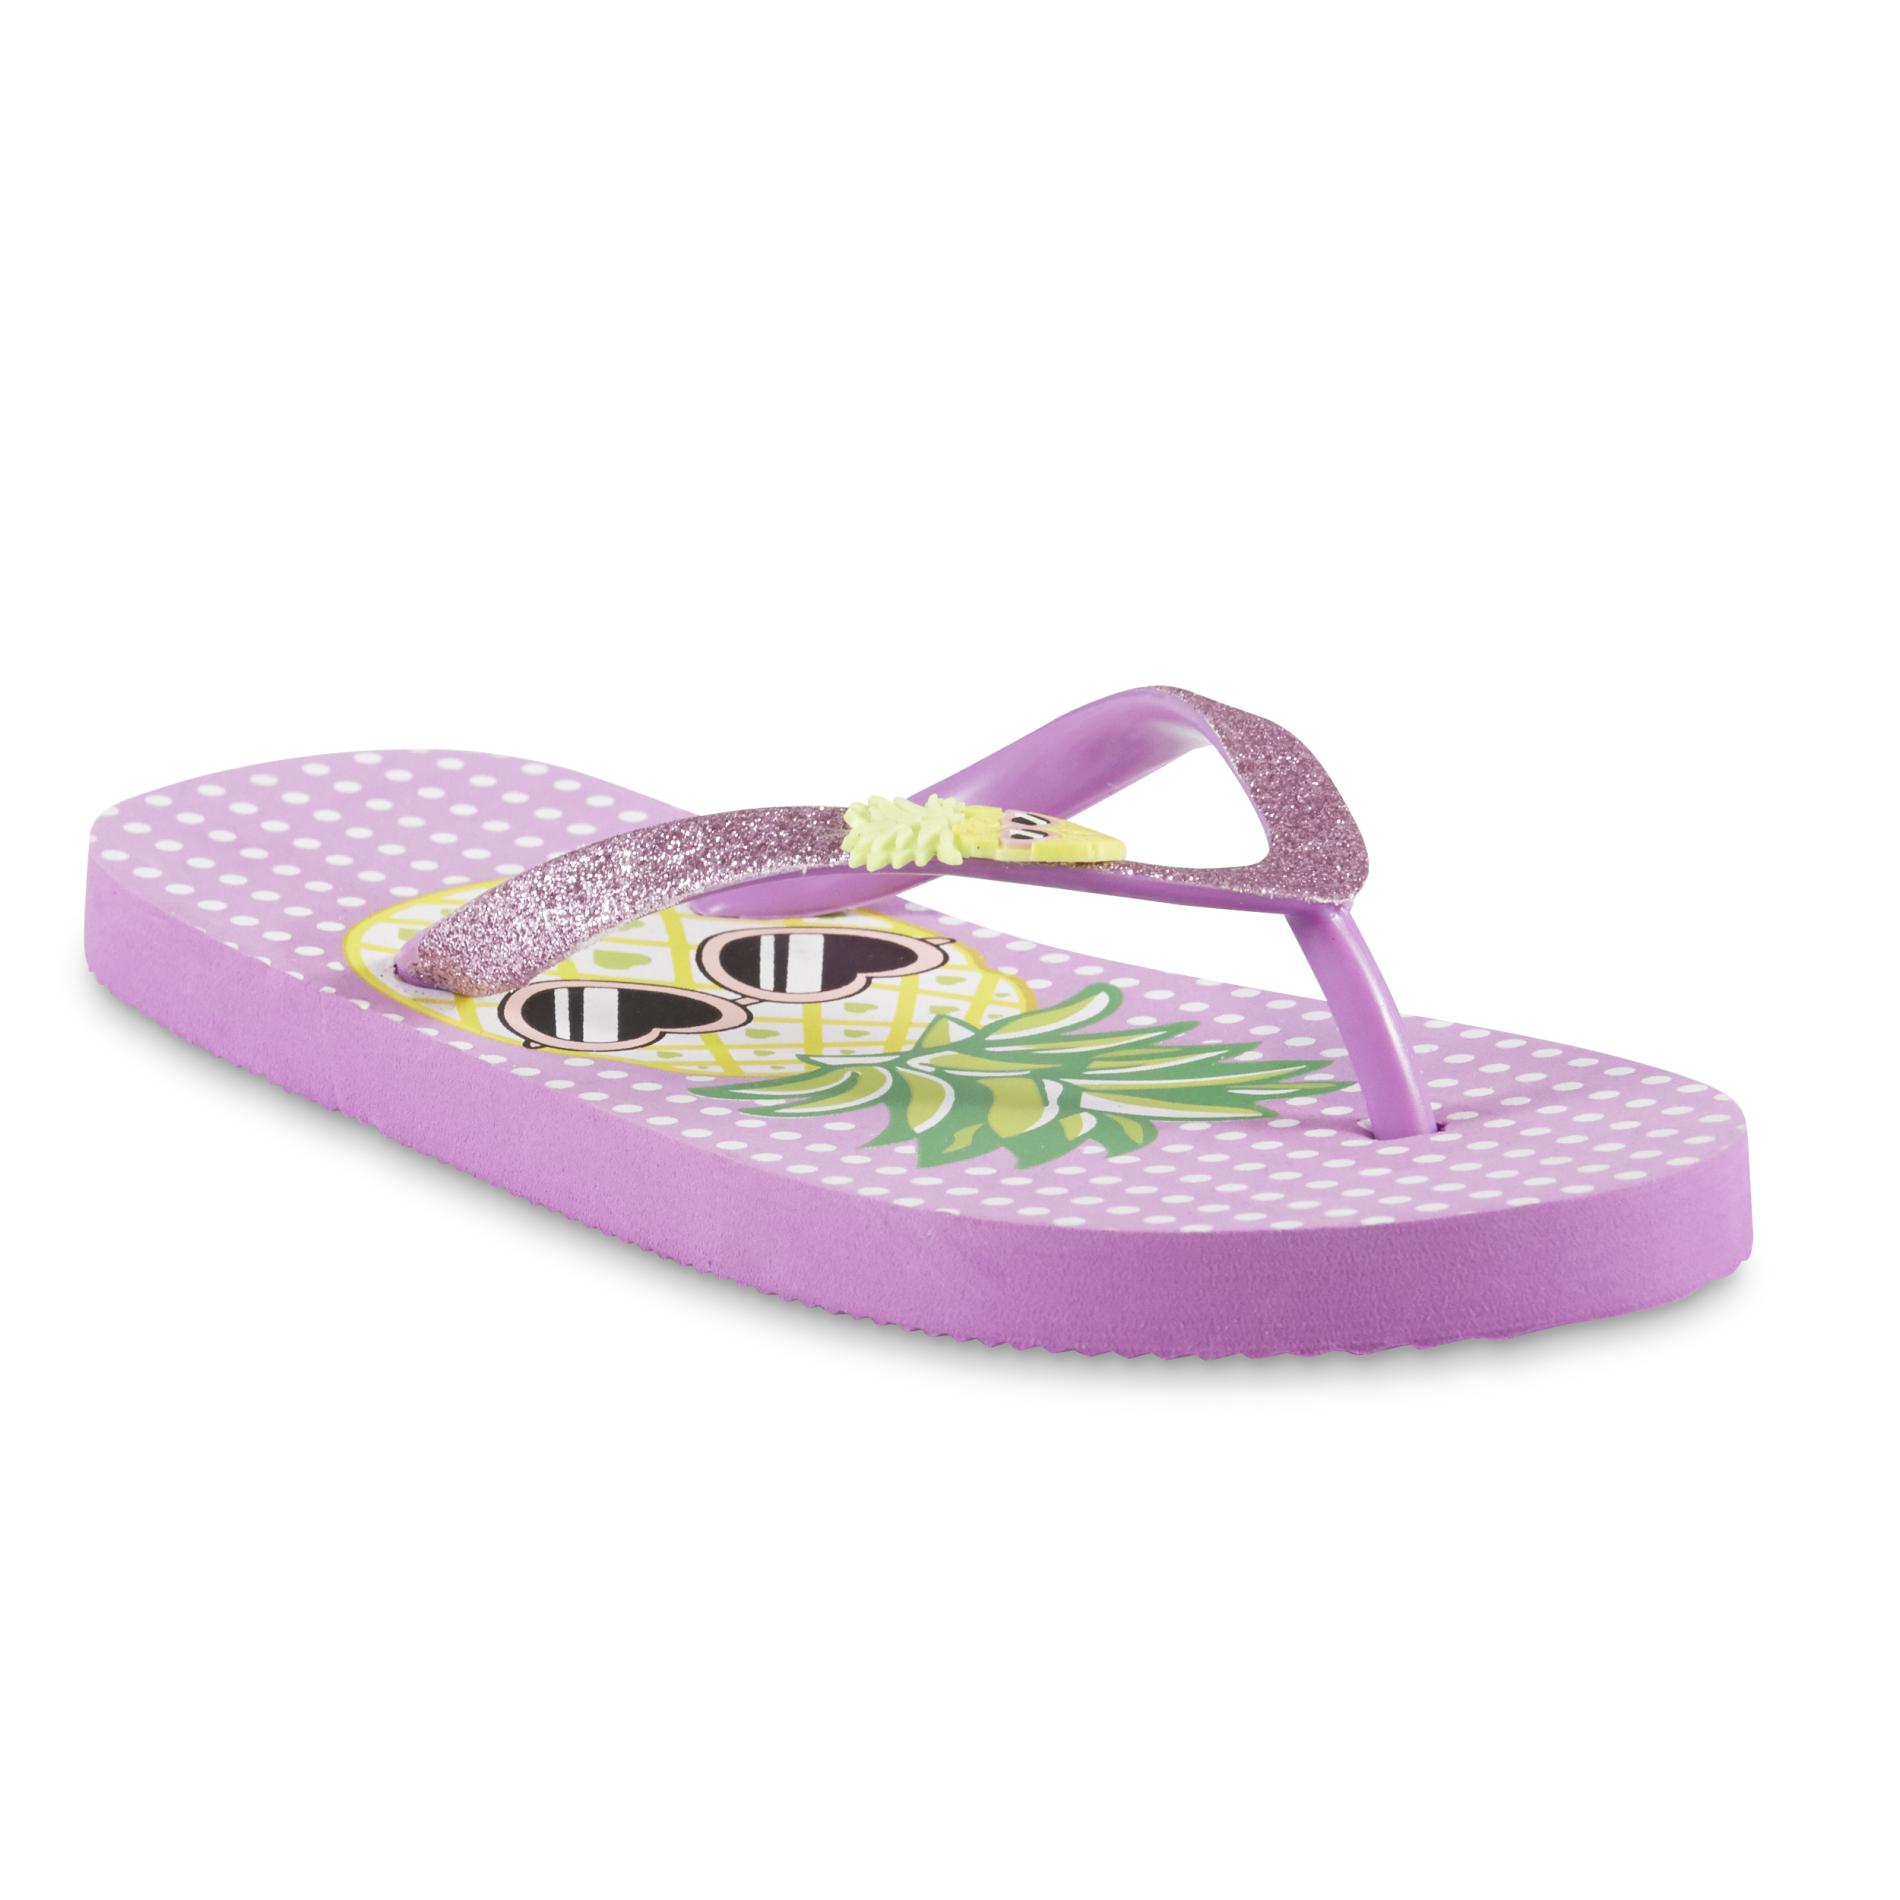 CRB Girl Youth Girls' Flip-Flop Sandal - Purple